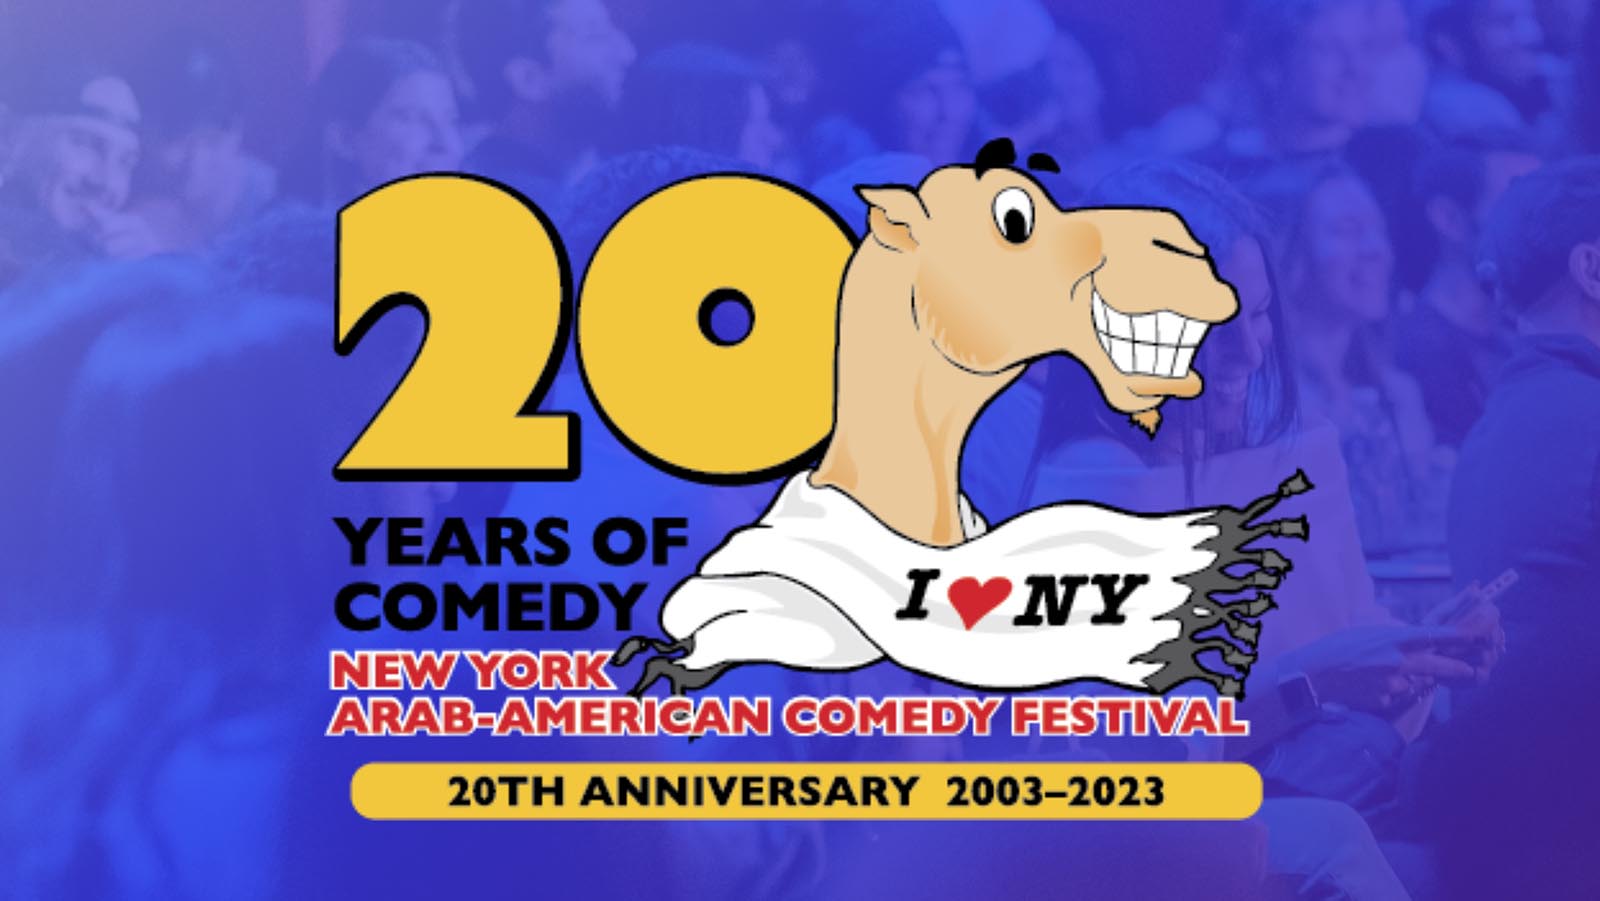 Artwork for the New York Arab American Comedy Festival. Courtesy image